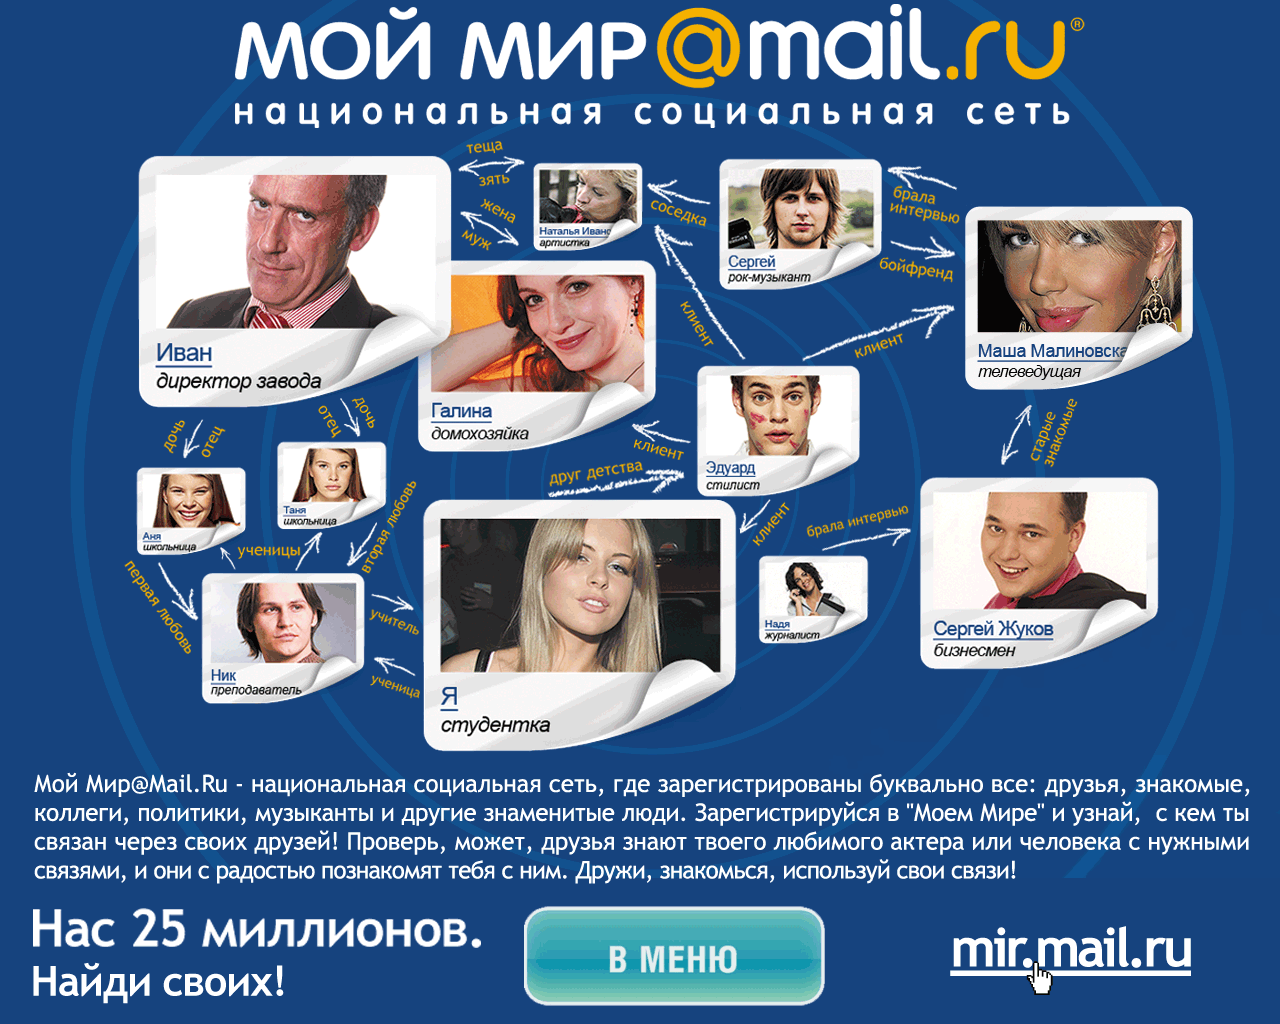 People mail ru. Мой мир. Мой мир@mail.ru. Mail мой мир. Соц сеть мой мир.